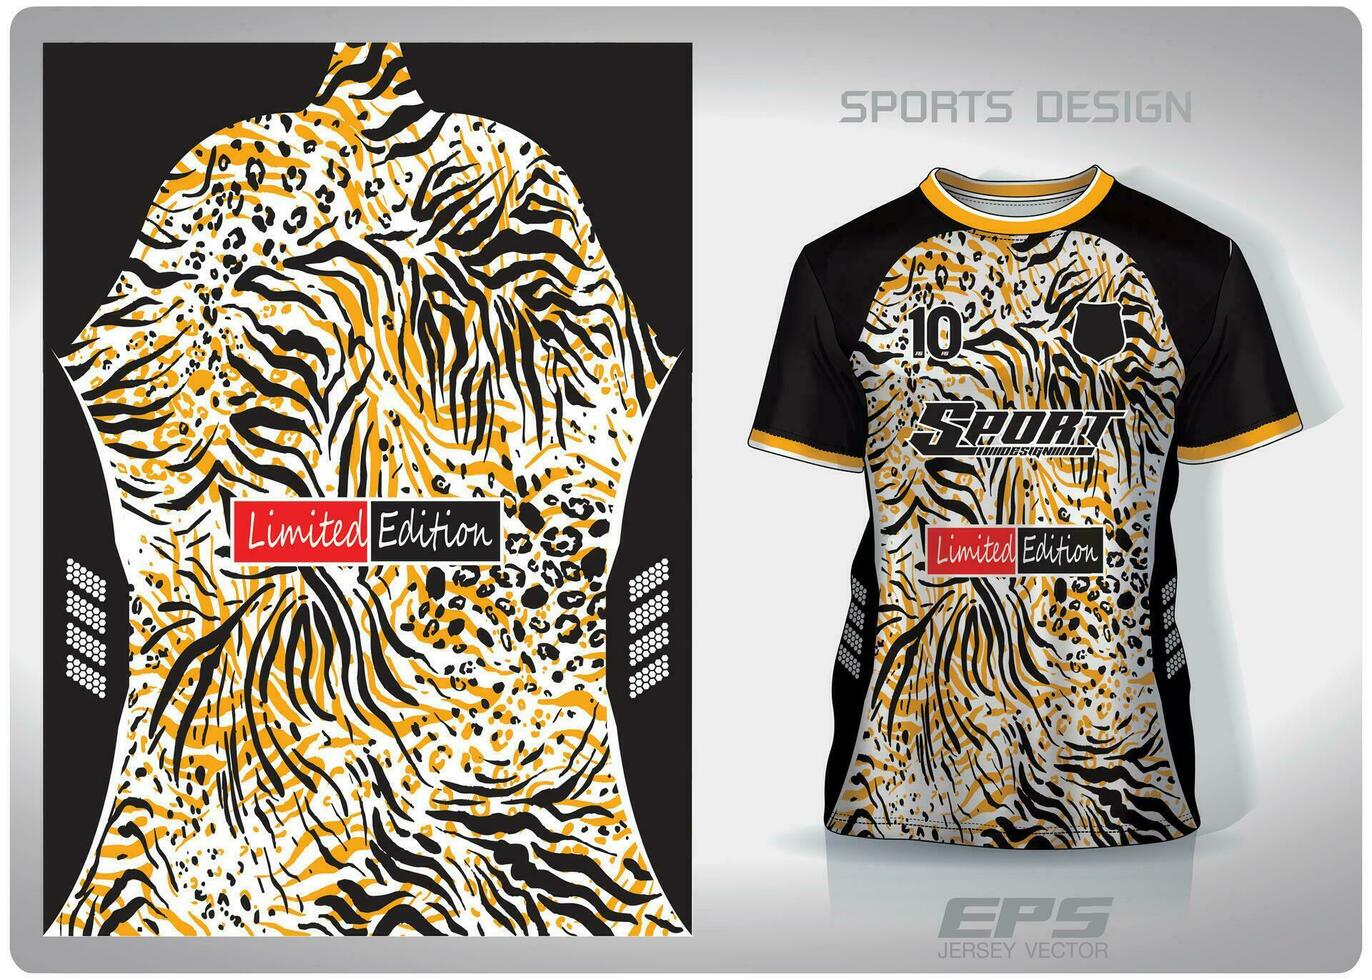 Vector sports shirt background image.Tiger leopard cheetah pattern design, illustration, textile background for sports t-shirt, football jersey shirt